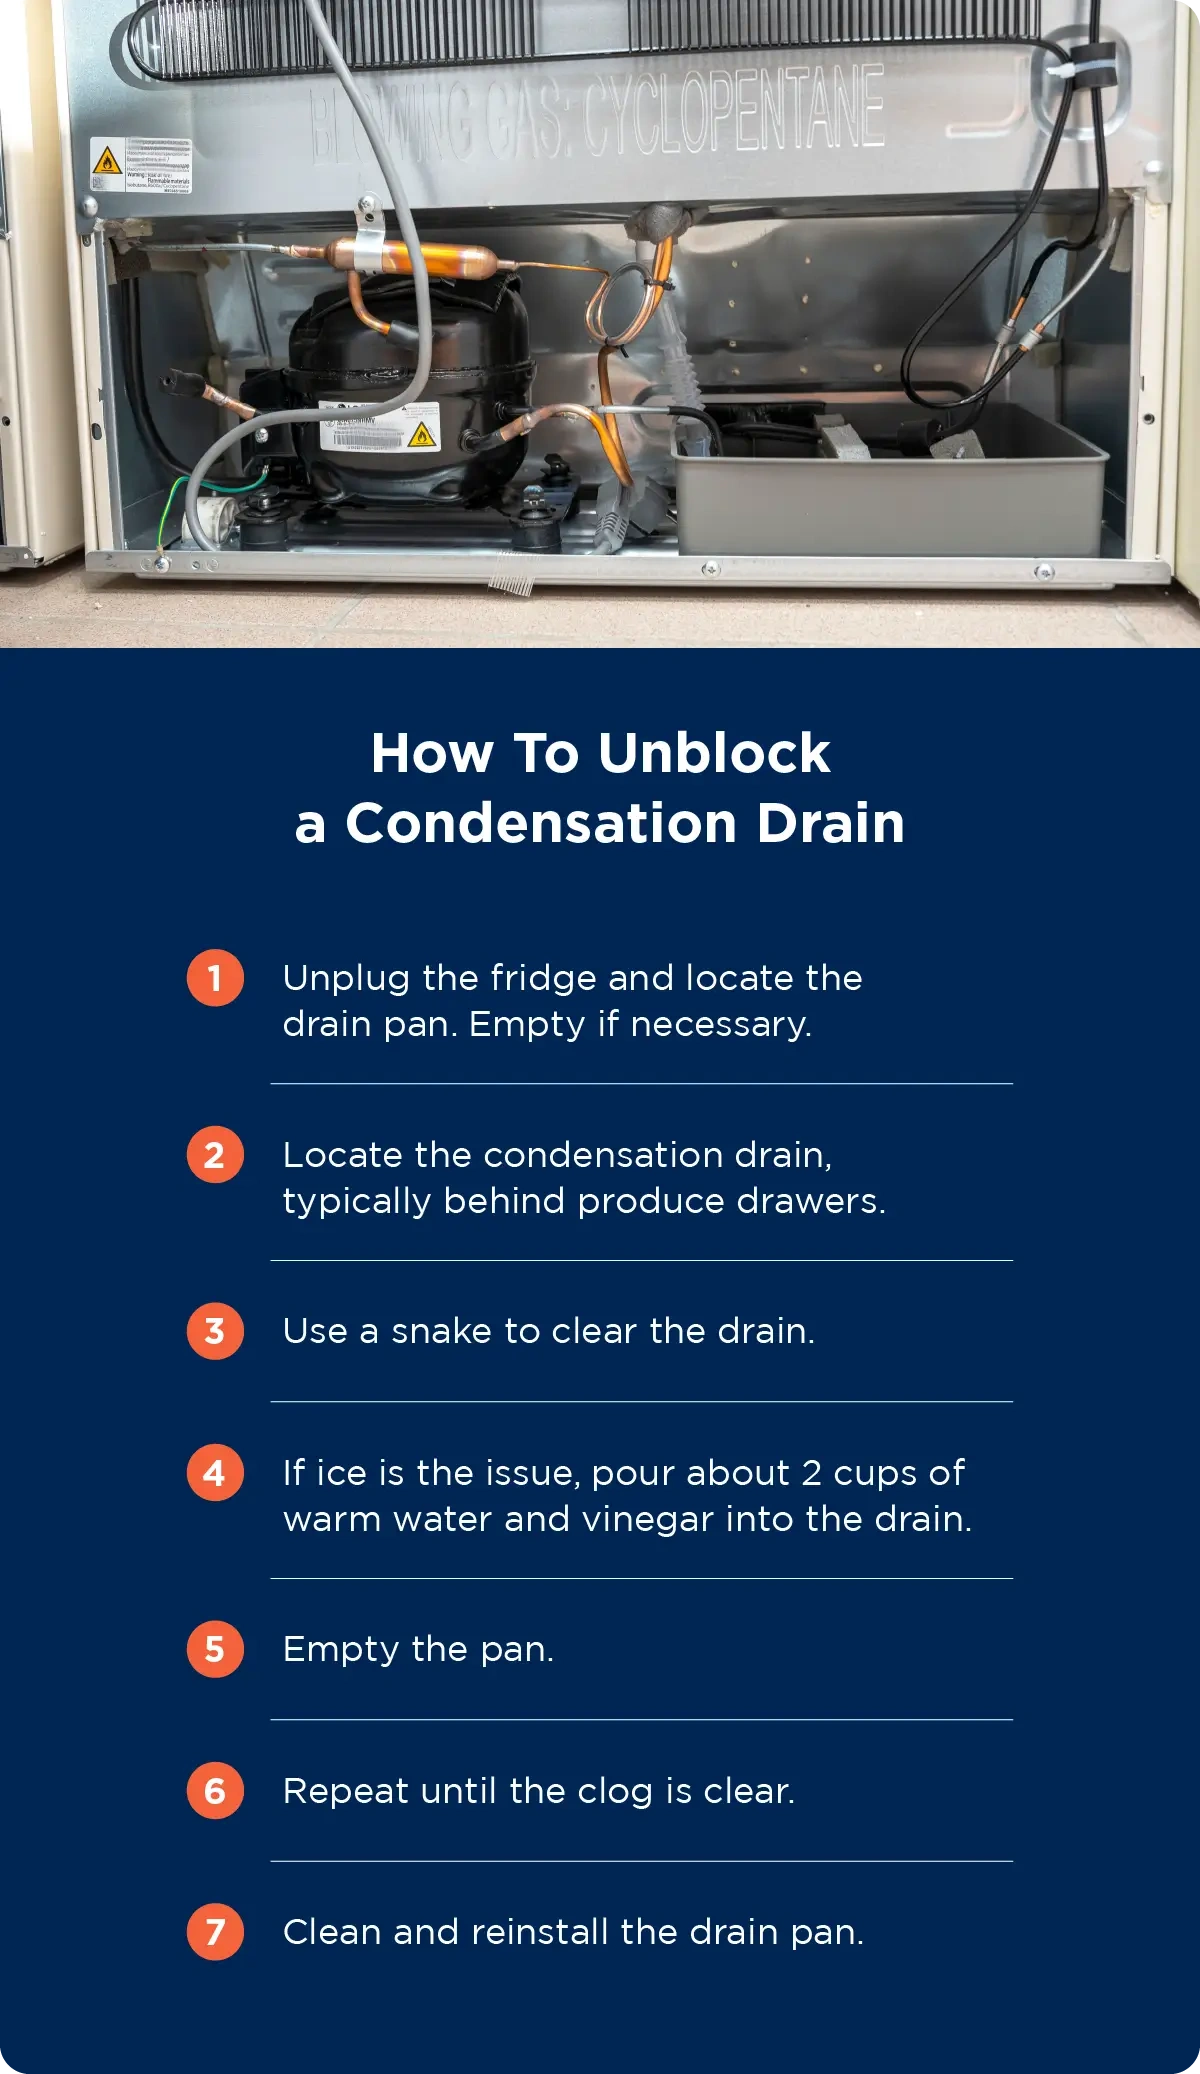 Image recaps how to unblock a condensation drain.